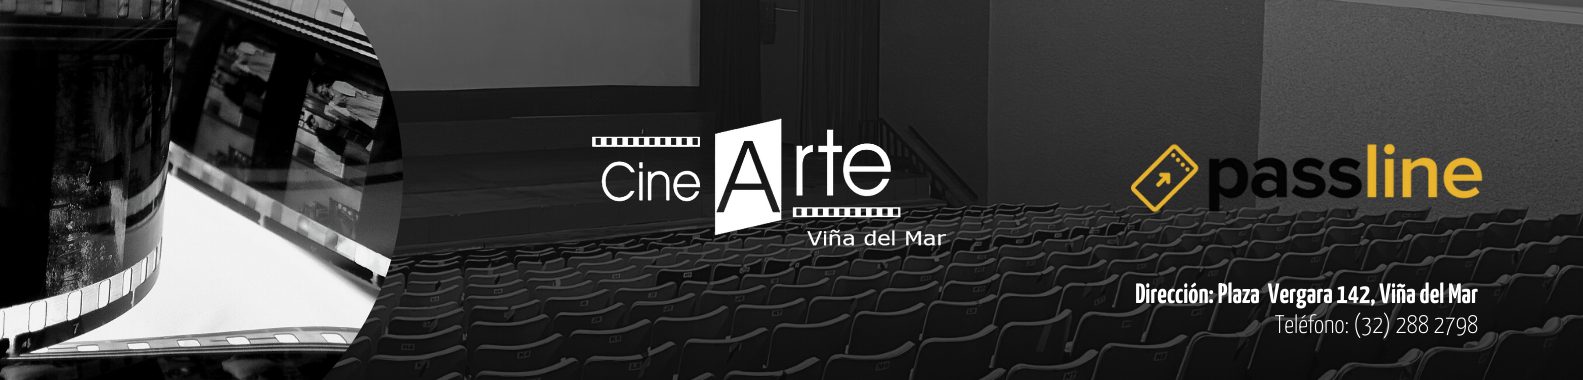 Banner Cine Arte